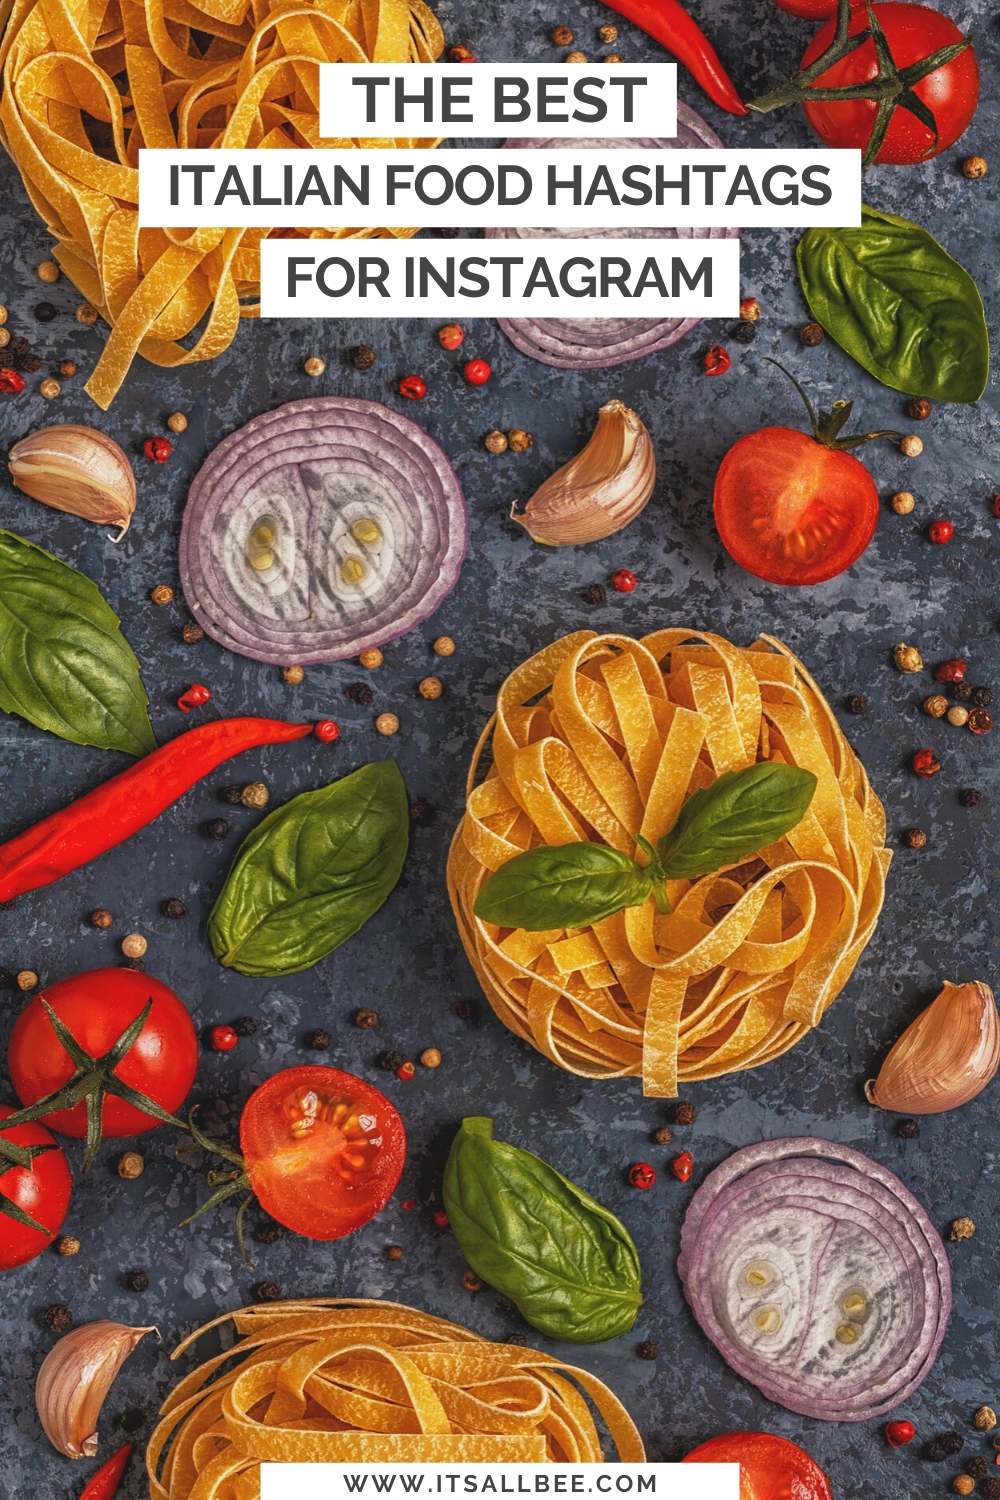 Best Italy Hashtags For Italian Travel On Instagram